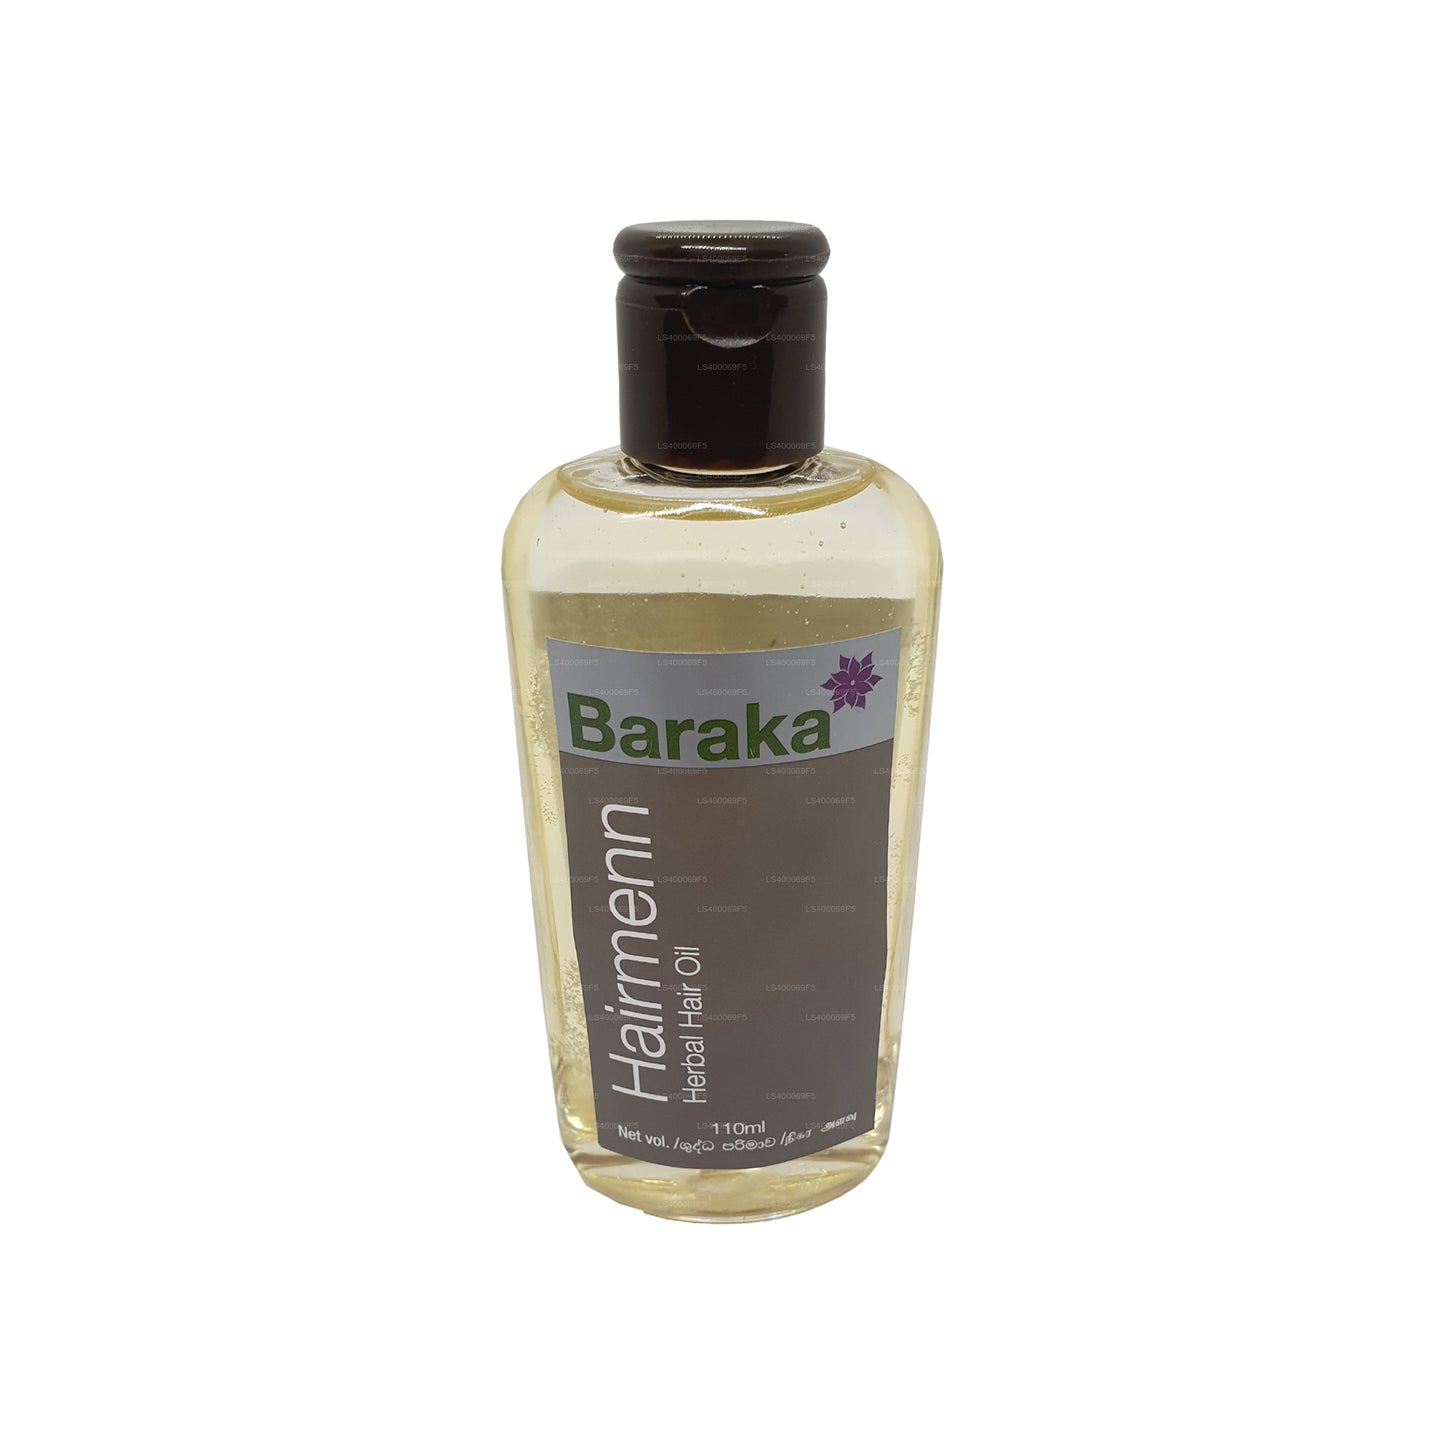 Baraka Hairmenn Haaröl (110 ml)